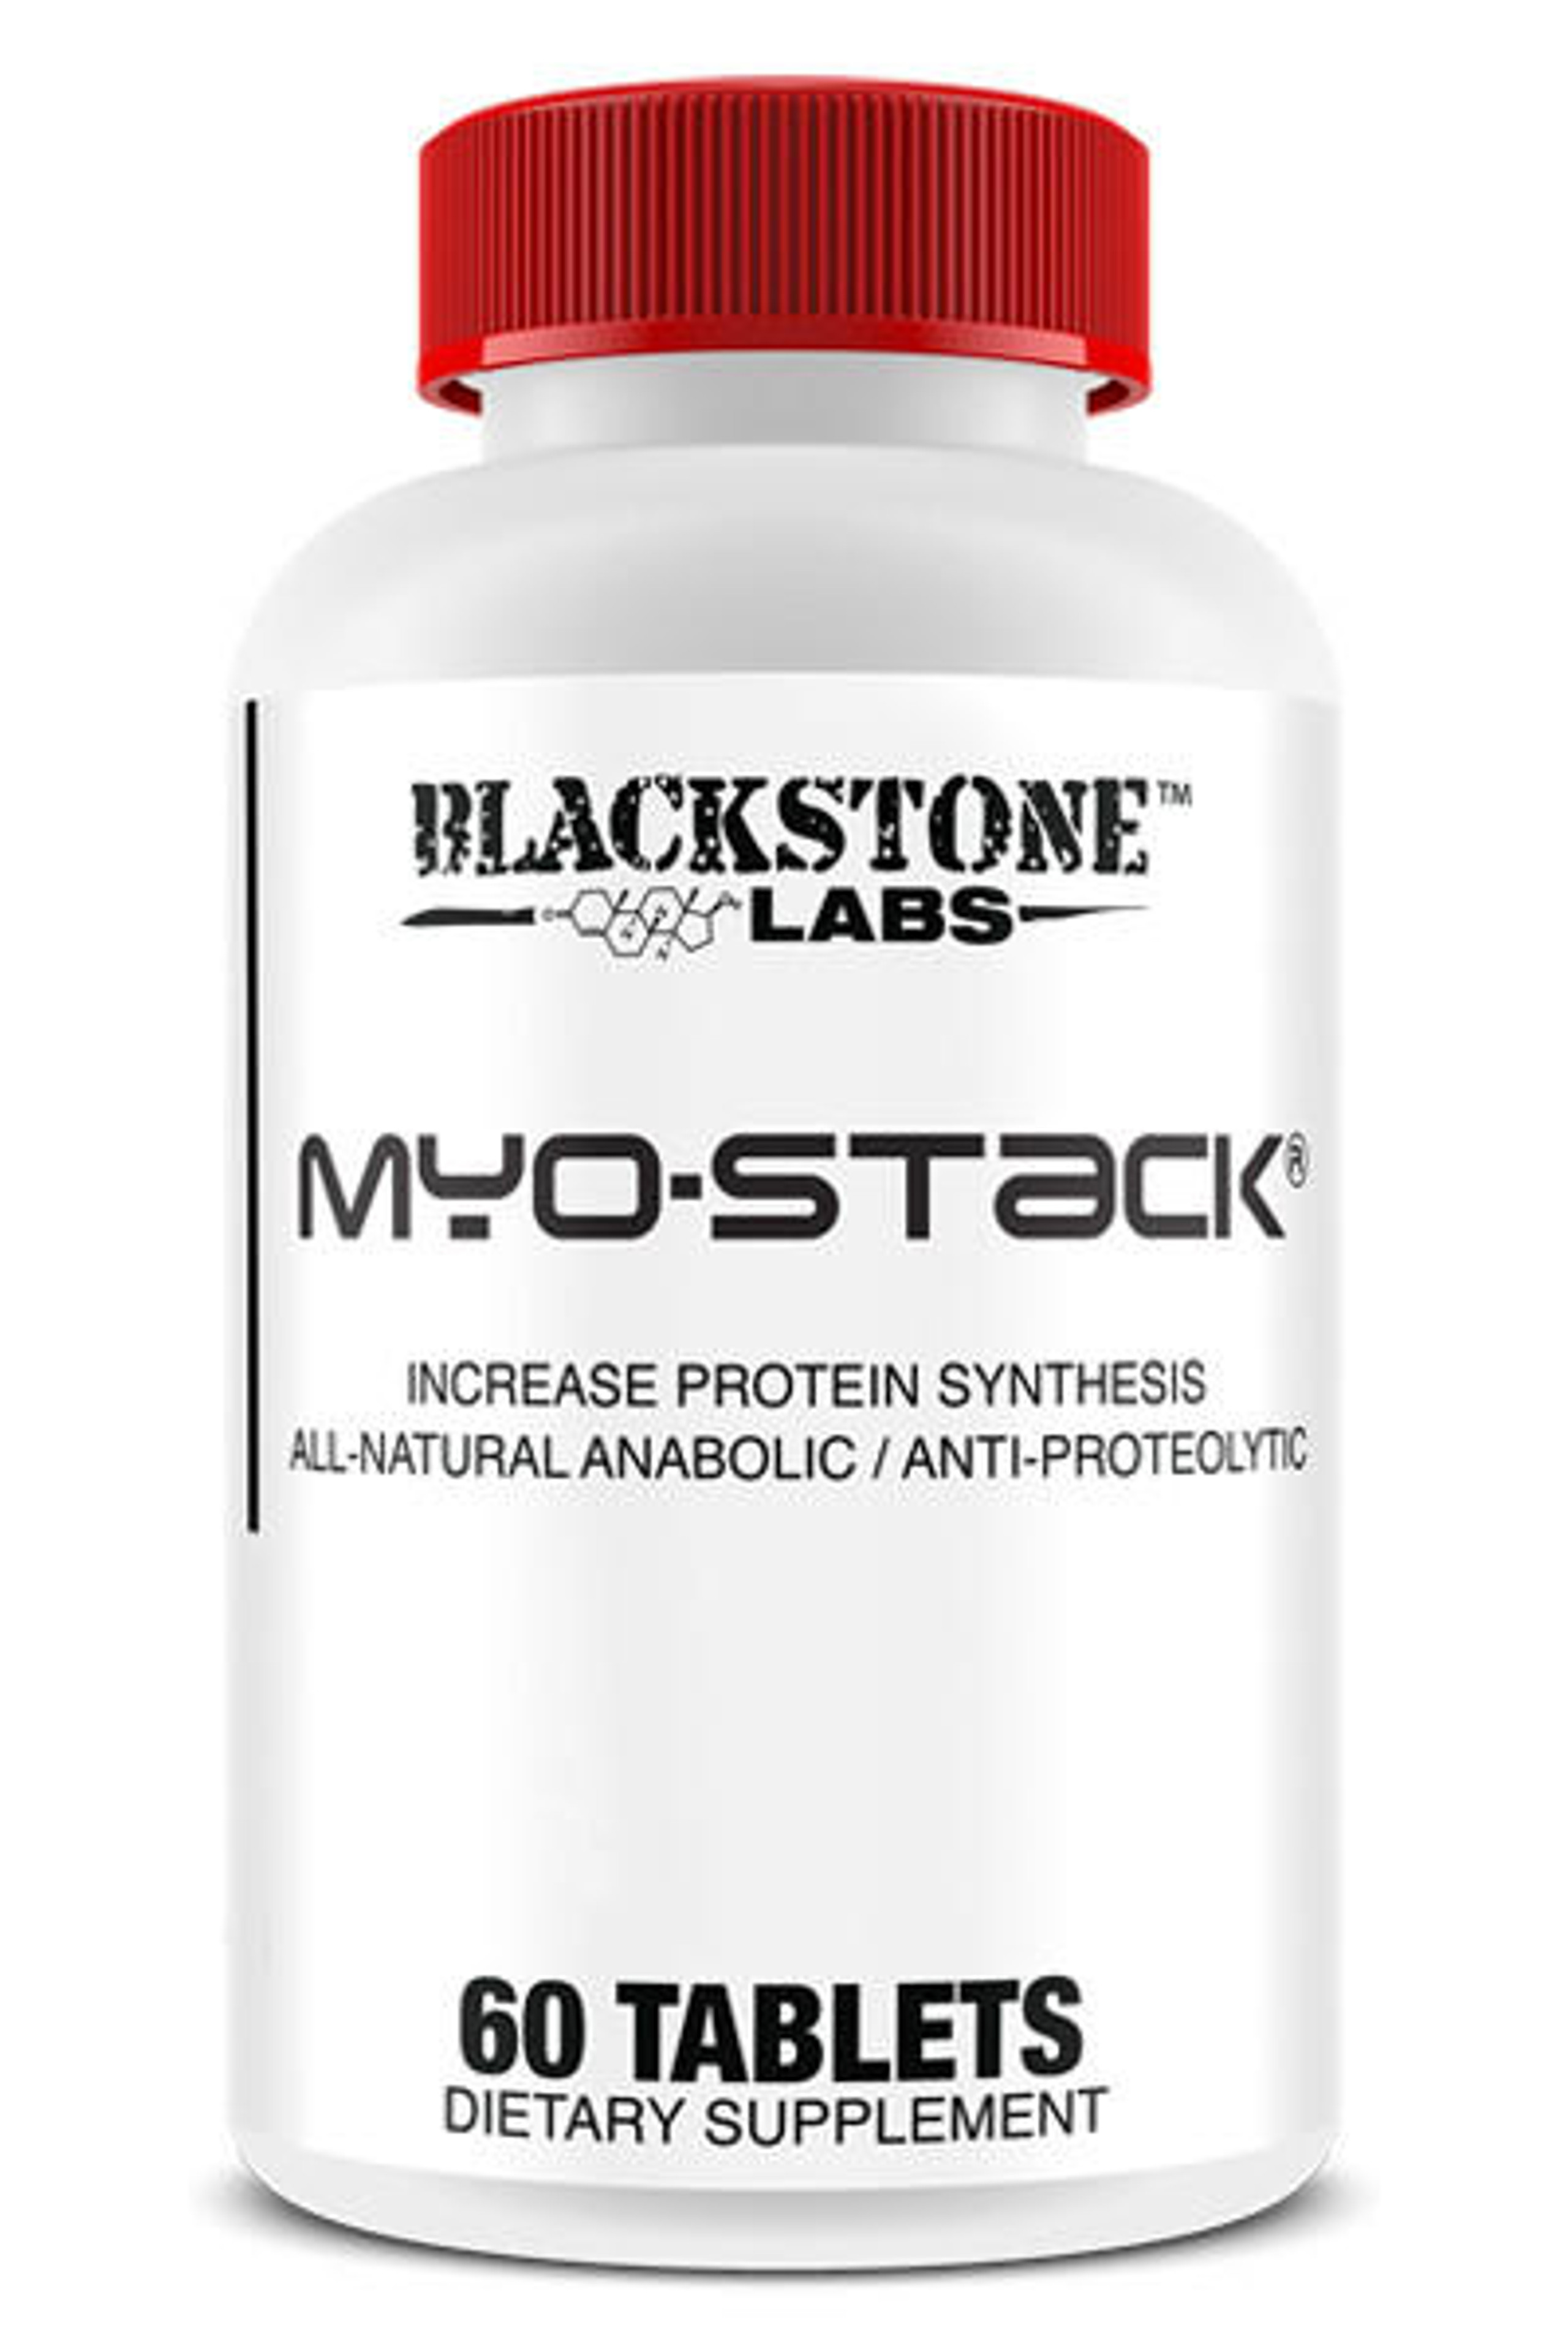 Myo-Stack by Blackstone Labs